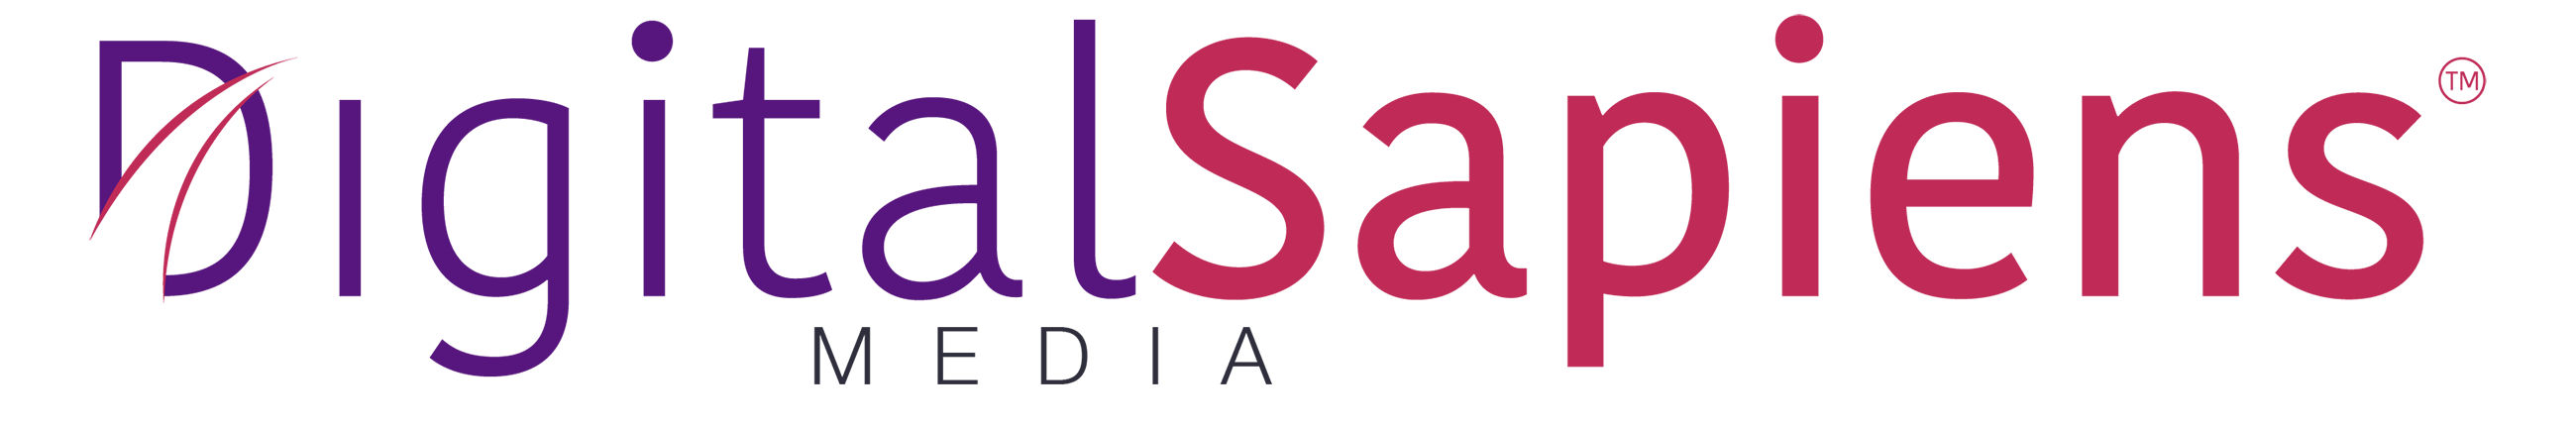 Digital Media Sapiens logo